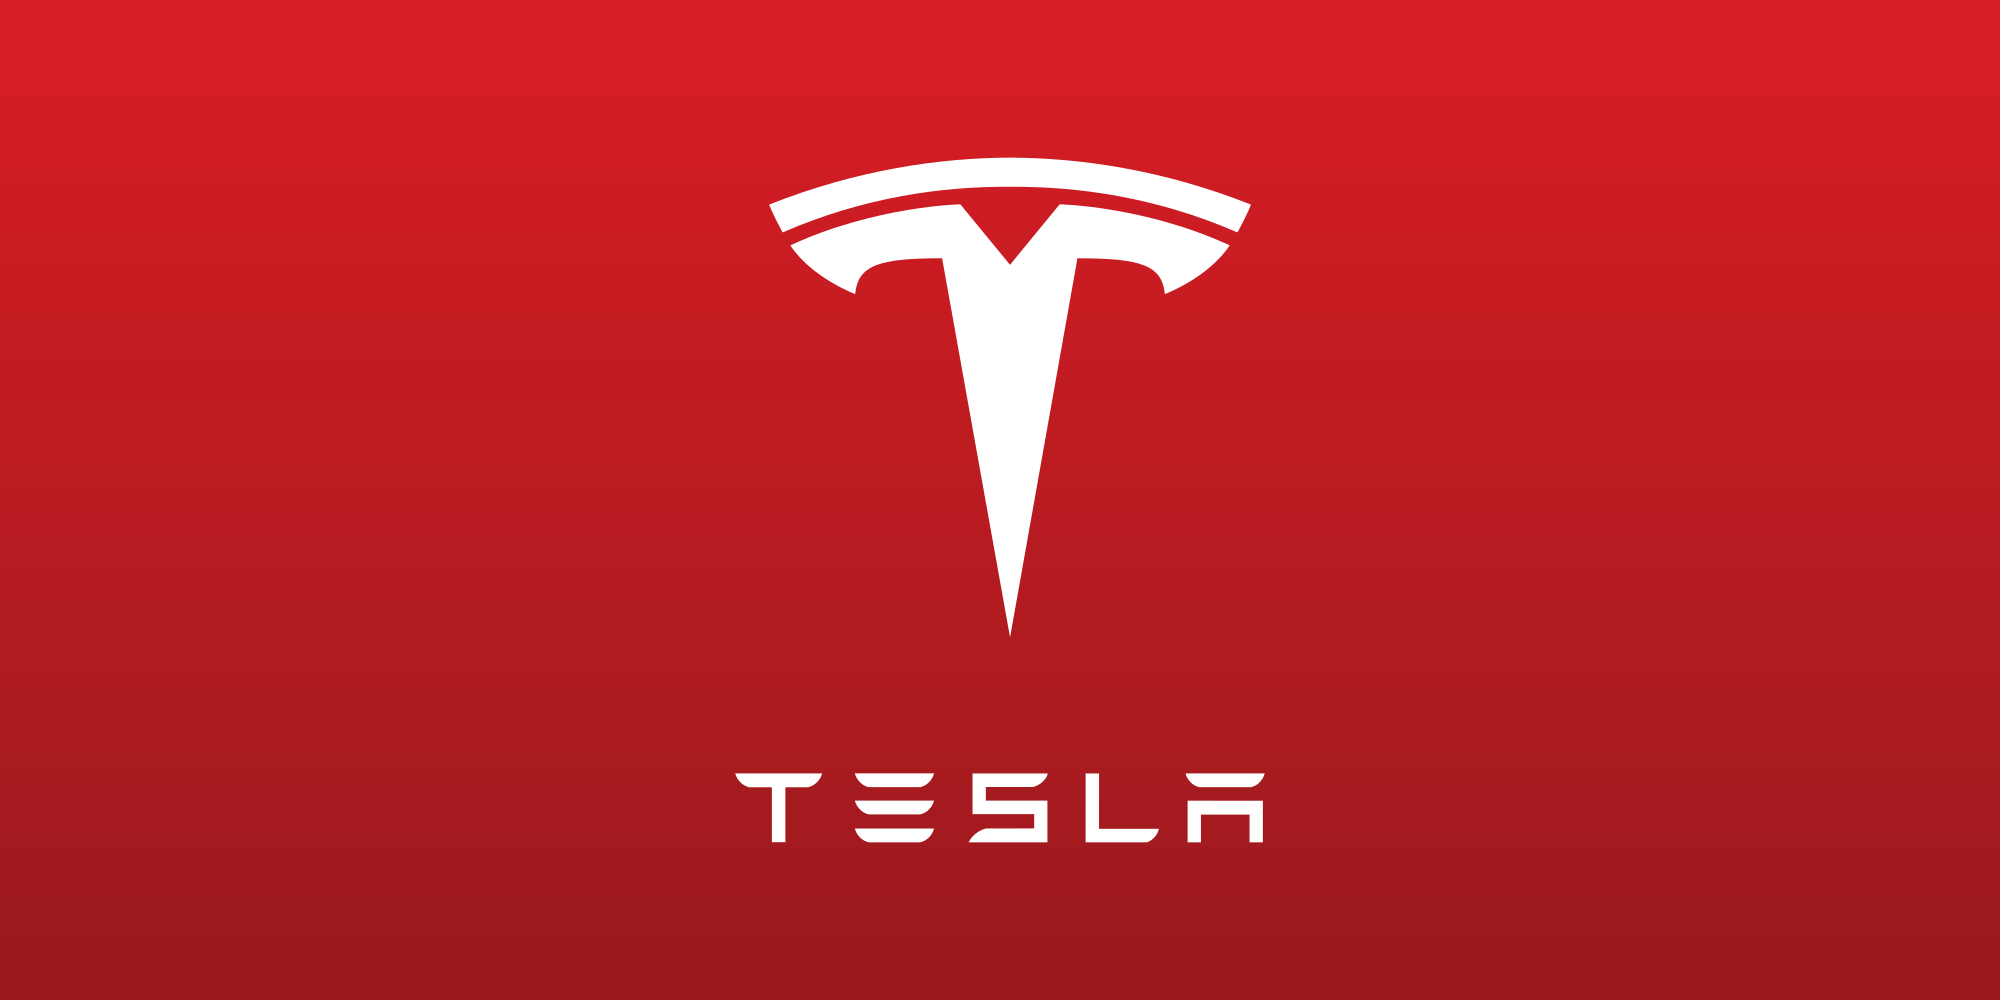 Tesla Brand Logo - Tesla brand. Technology, characteristics, features and logo